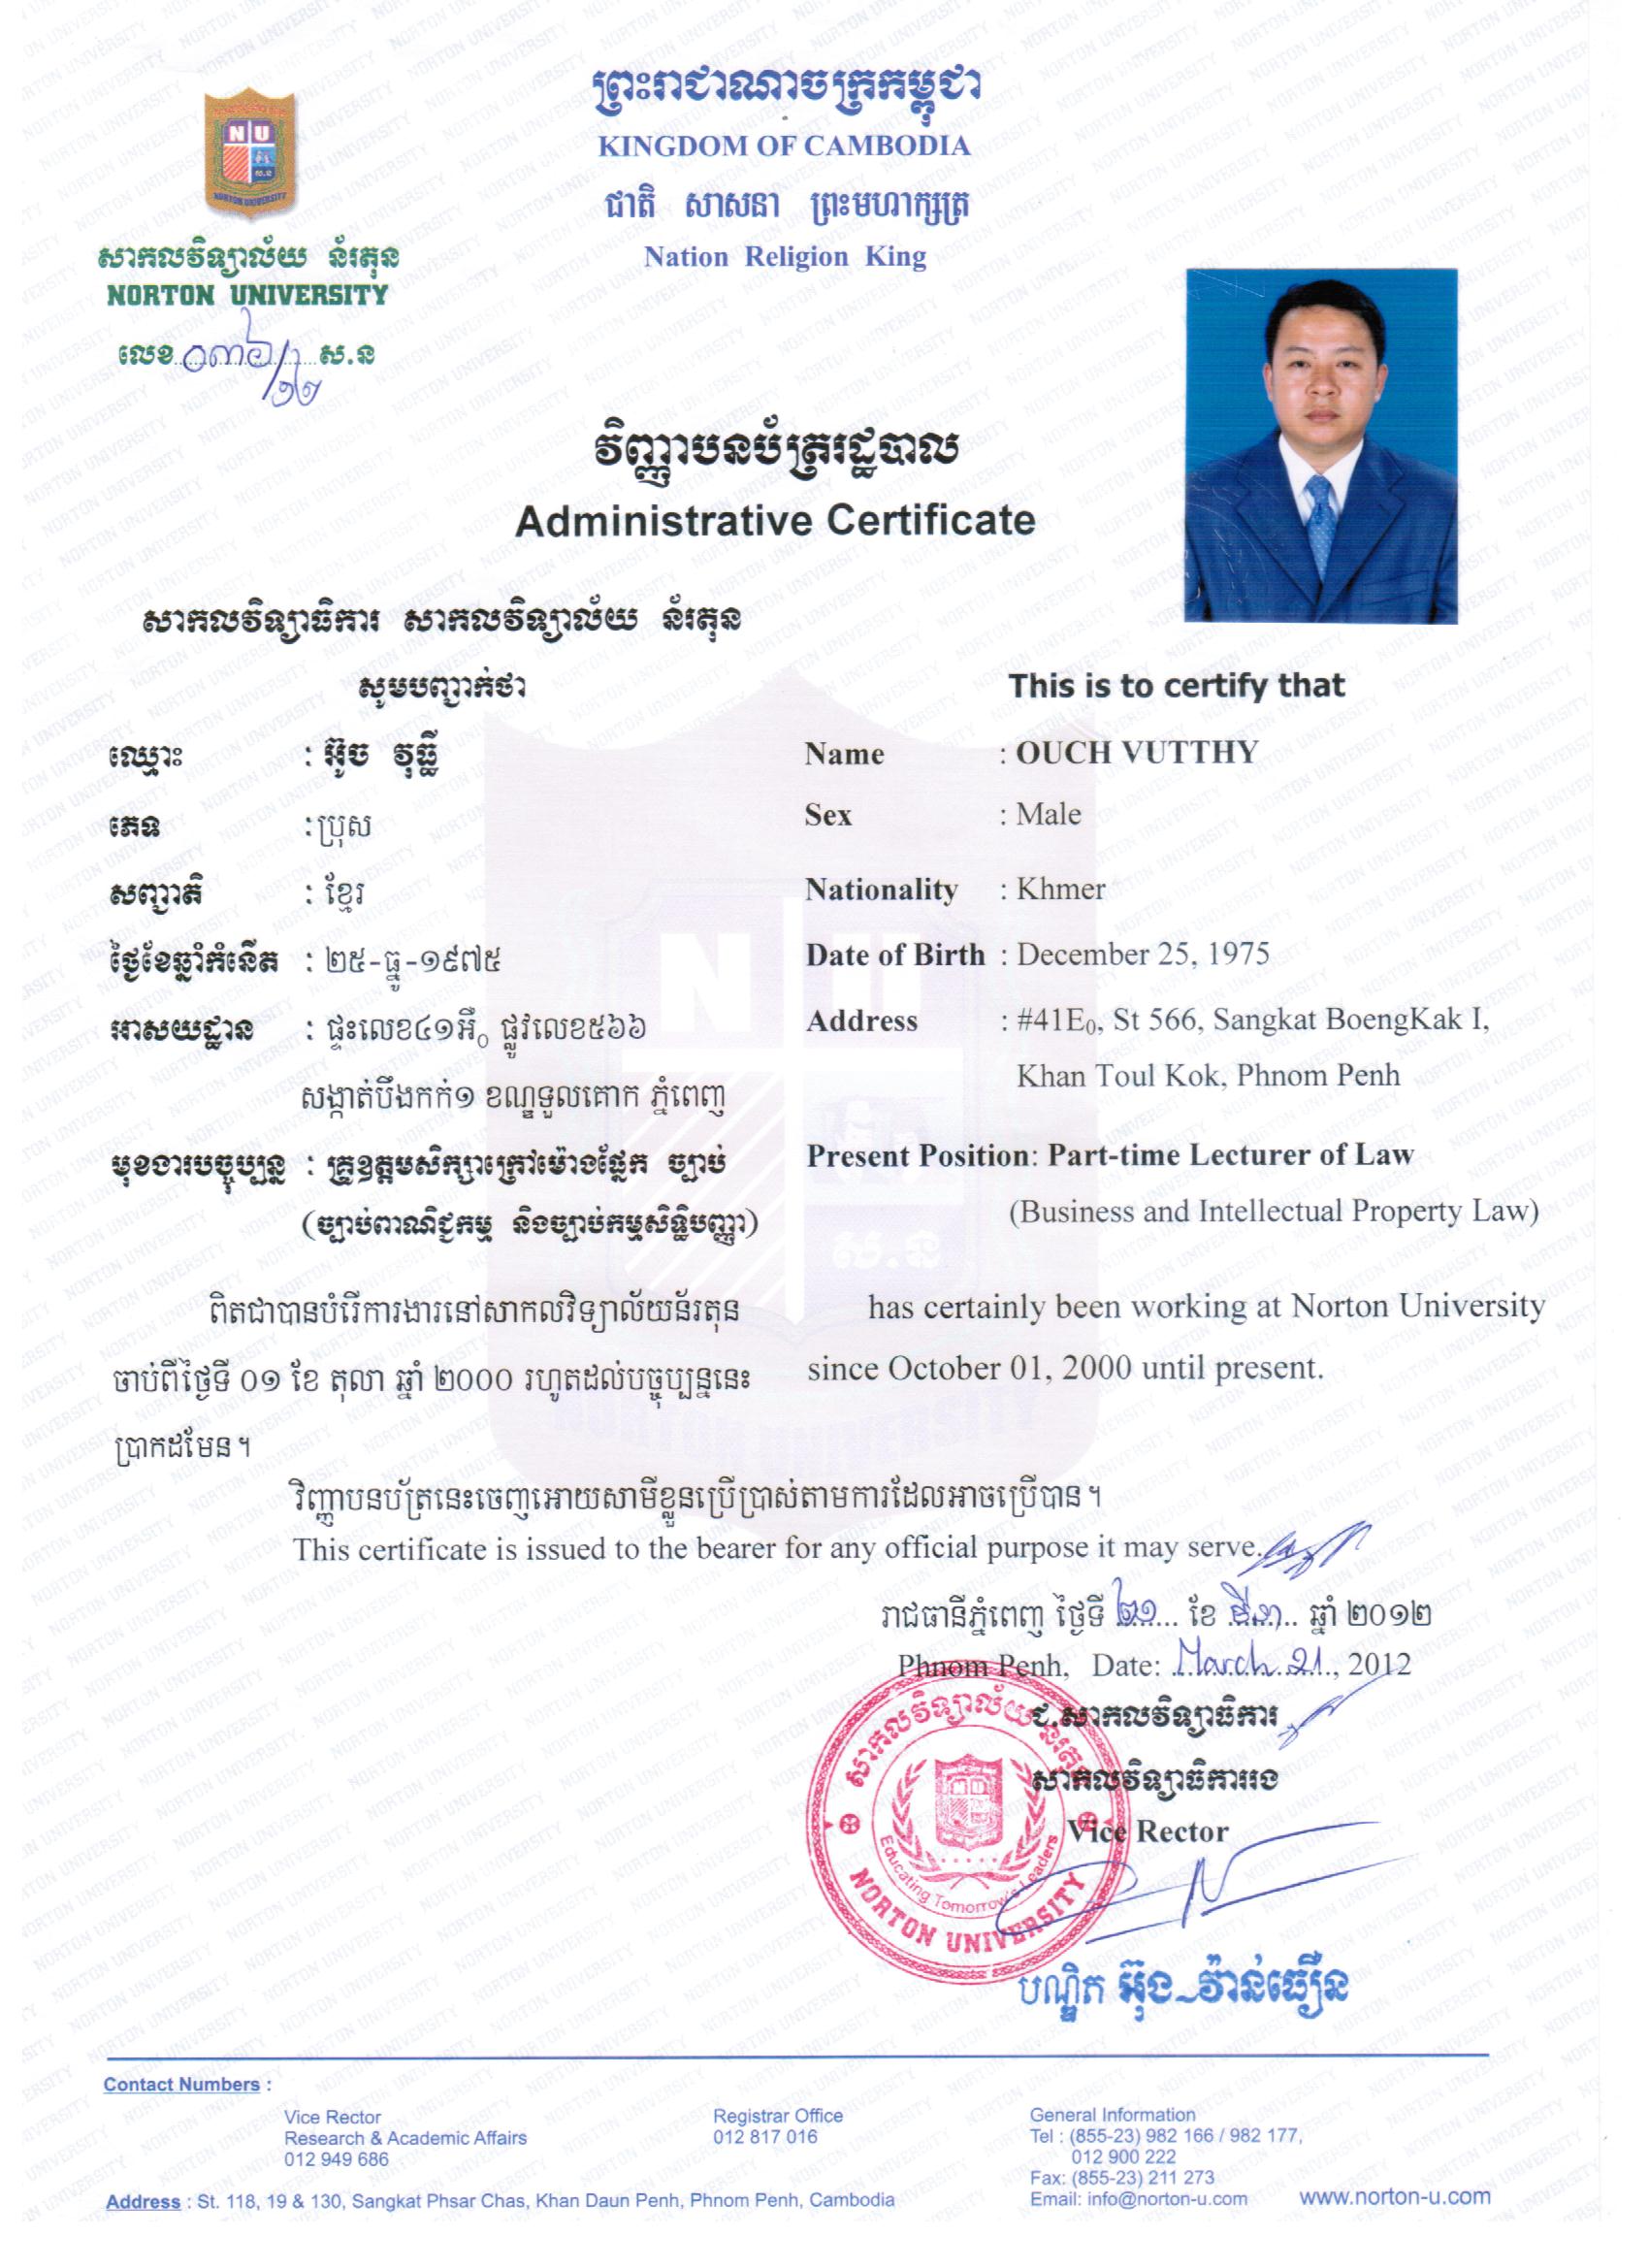 Norton Certificate 001